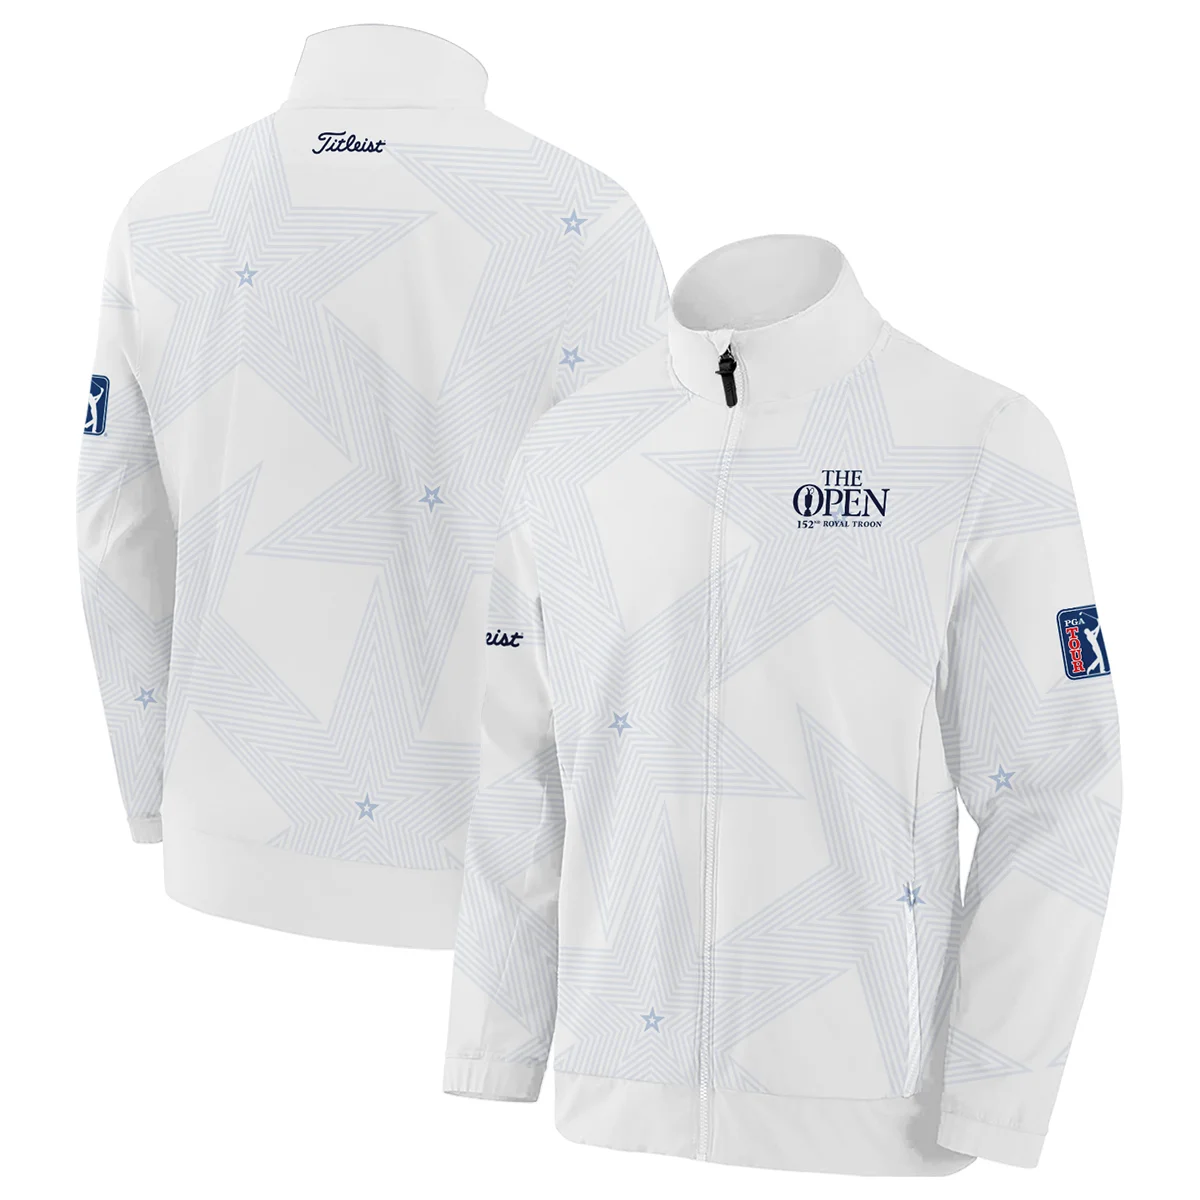 The 152nd Open Championship Golf Sport Titleist Sleeveless Jacket Sports Star Sripe White Navy Sleeveless Jacket